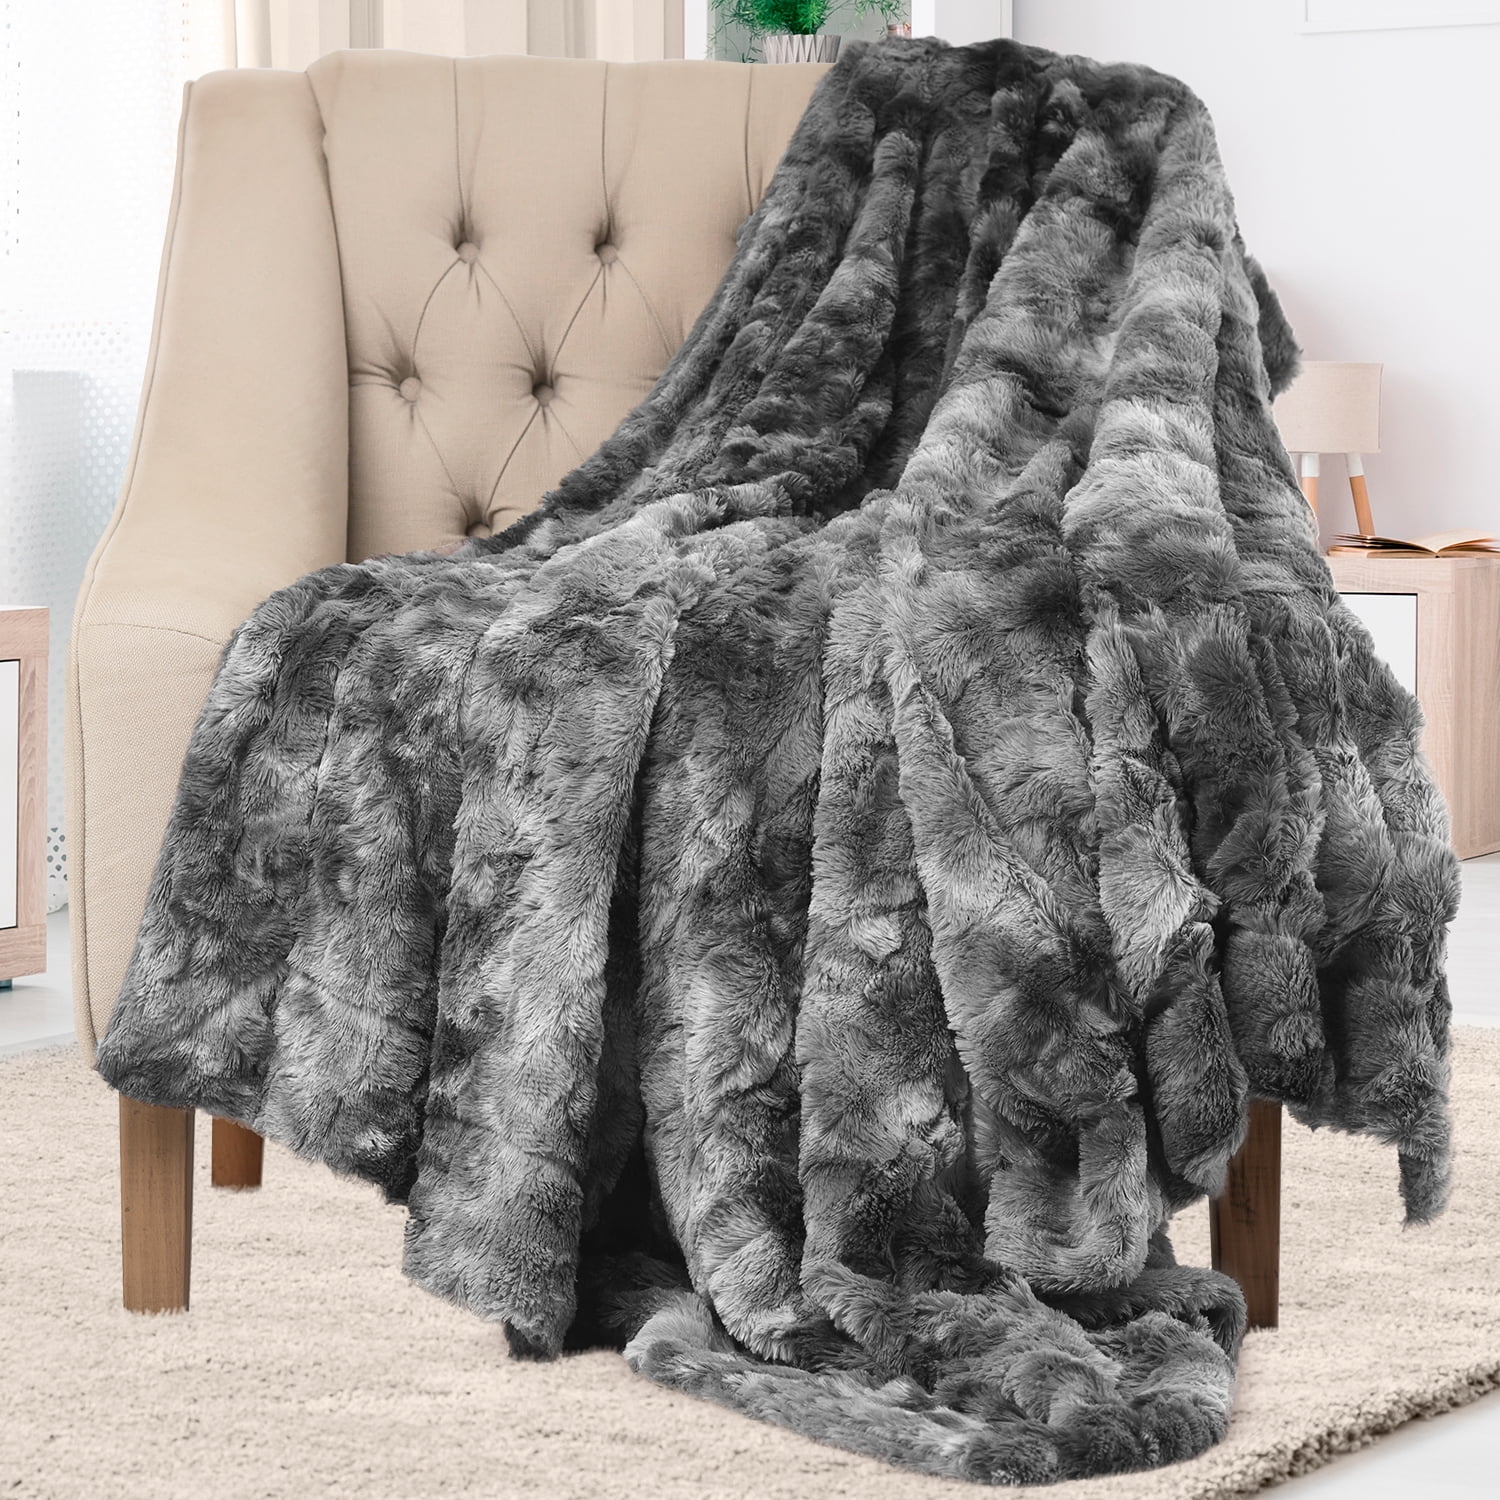 New White Smoke Throws Blanket Rollmink Snug Throws Fux Fur Soft Bed Sofa Throw 